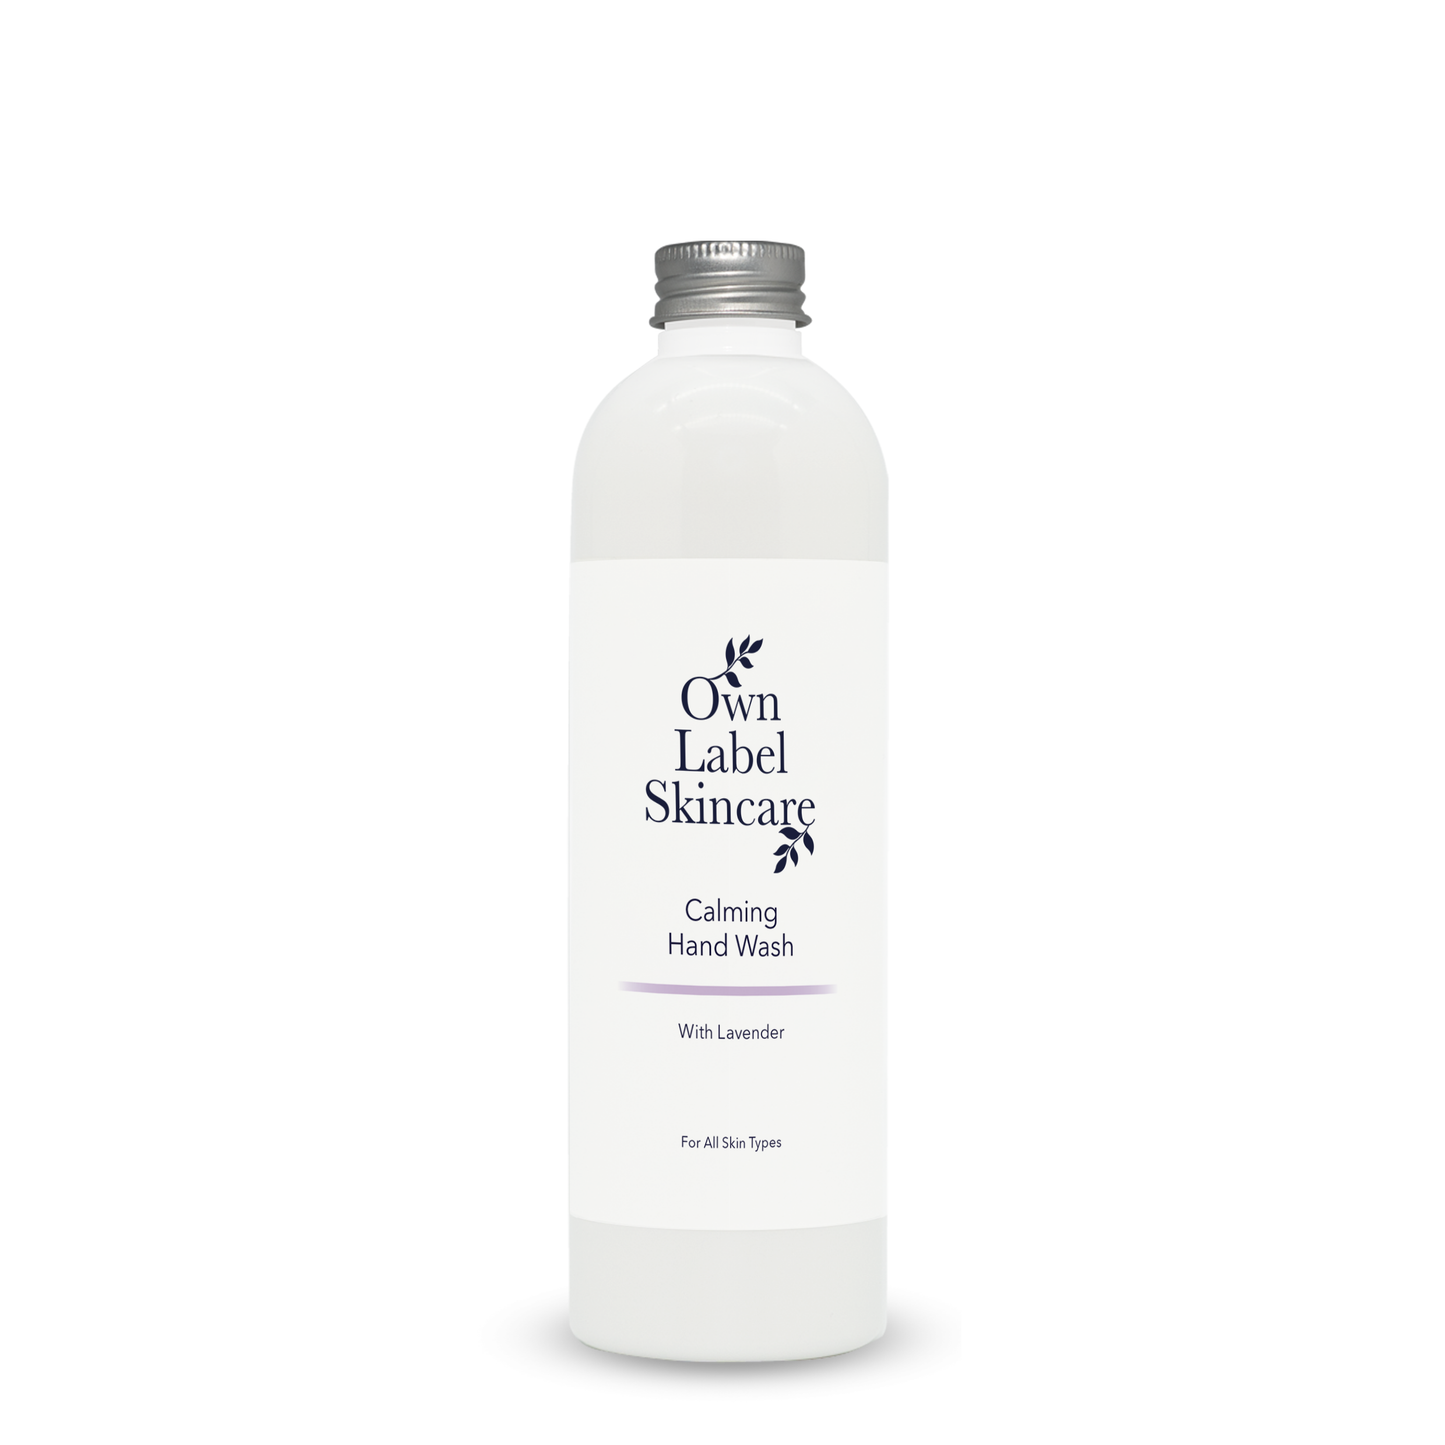 Calming Lavender Vegan Hand Wash. Own Label Skincare